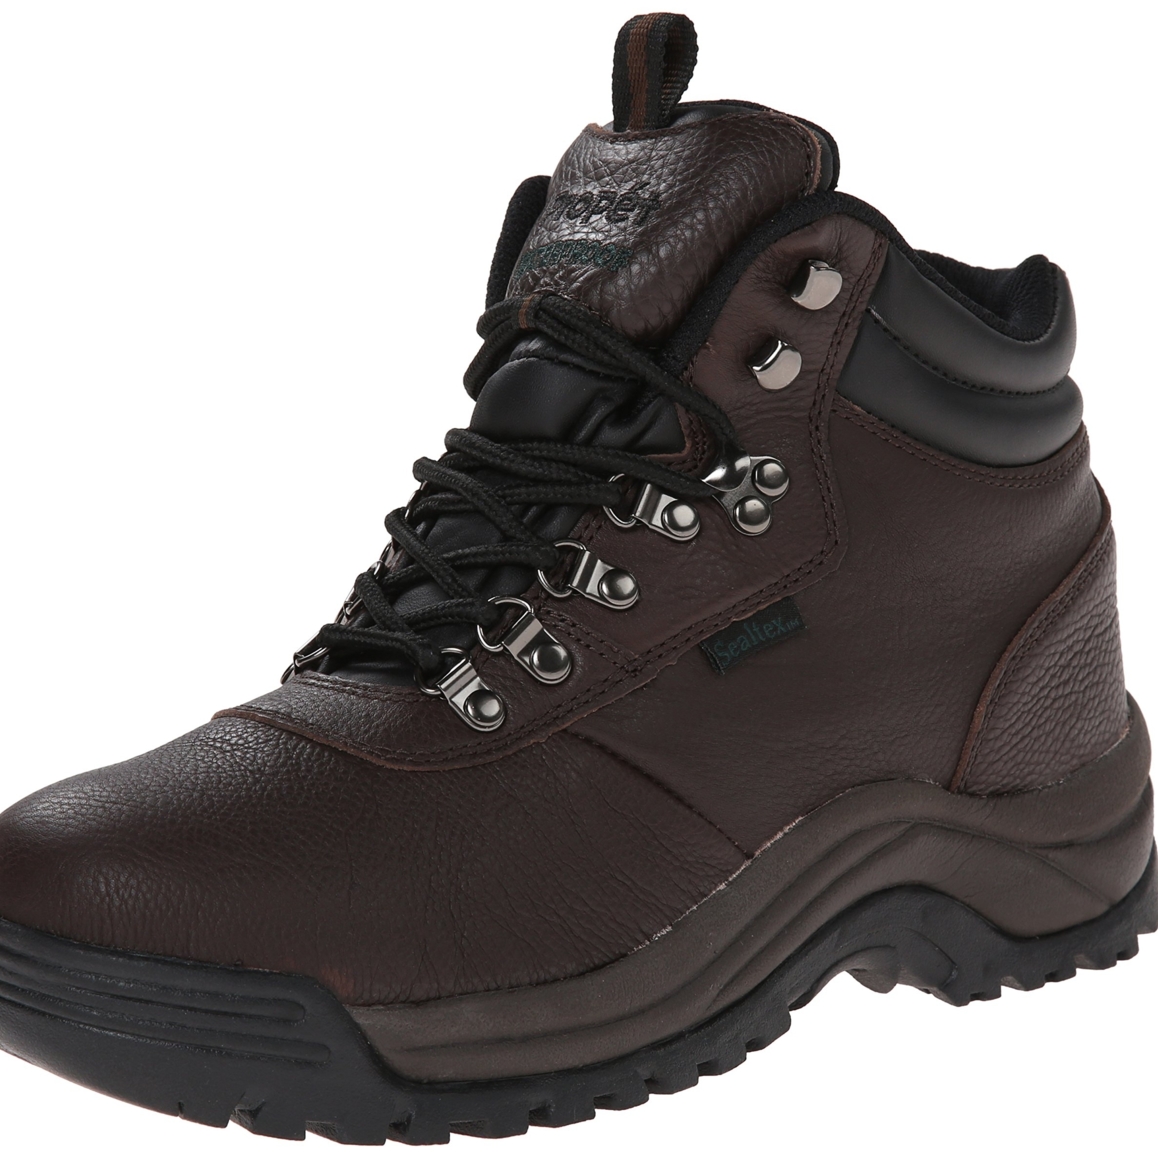 Propet Men's Cliff Walker Hiking Boot Bronco Brown - M3188BRO - BRONCO BROWN, 13-2E